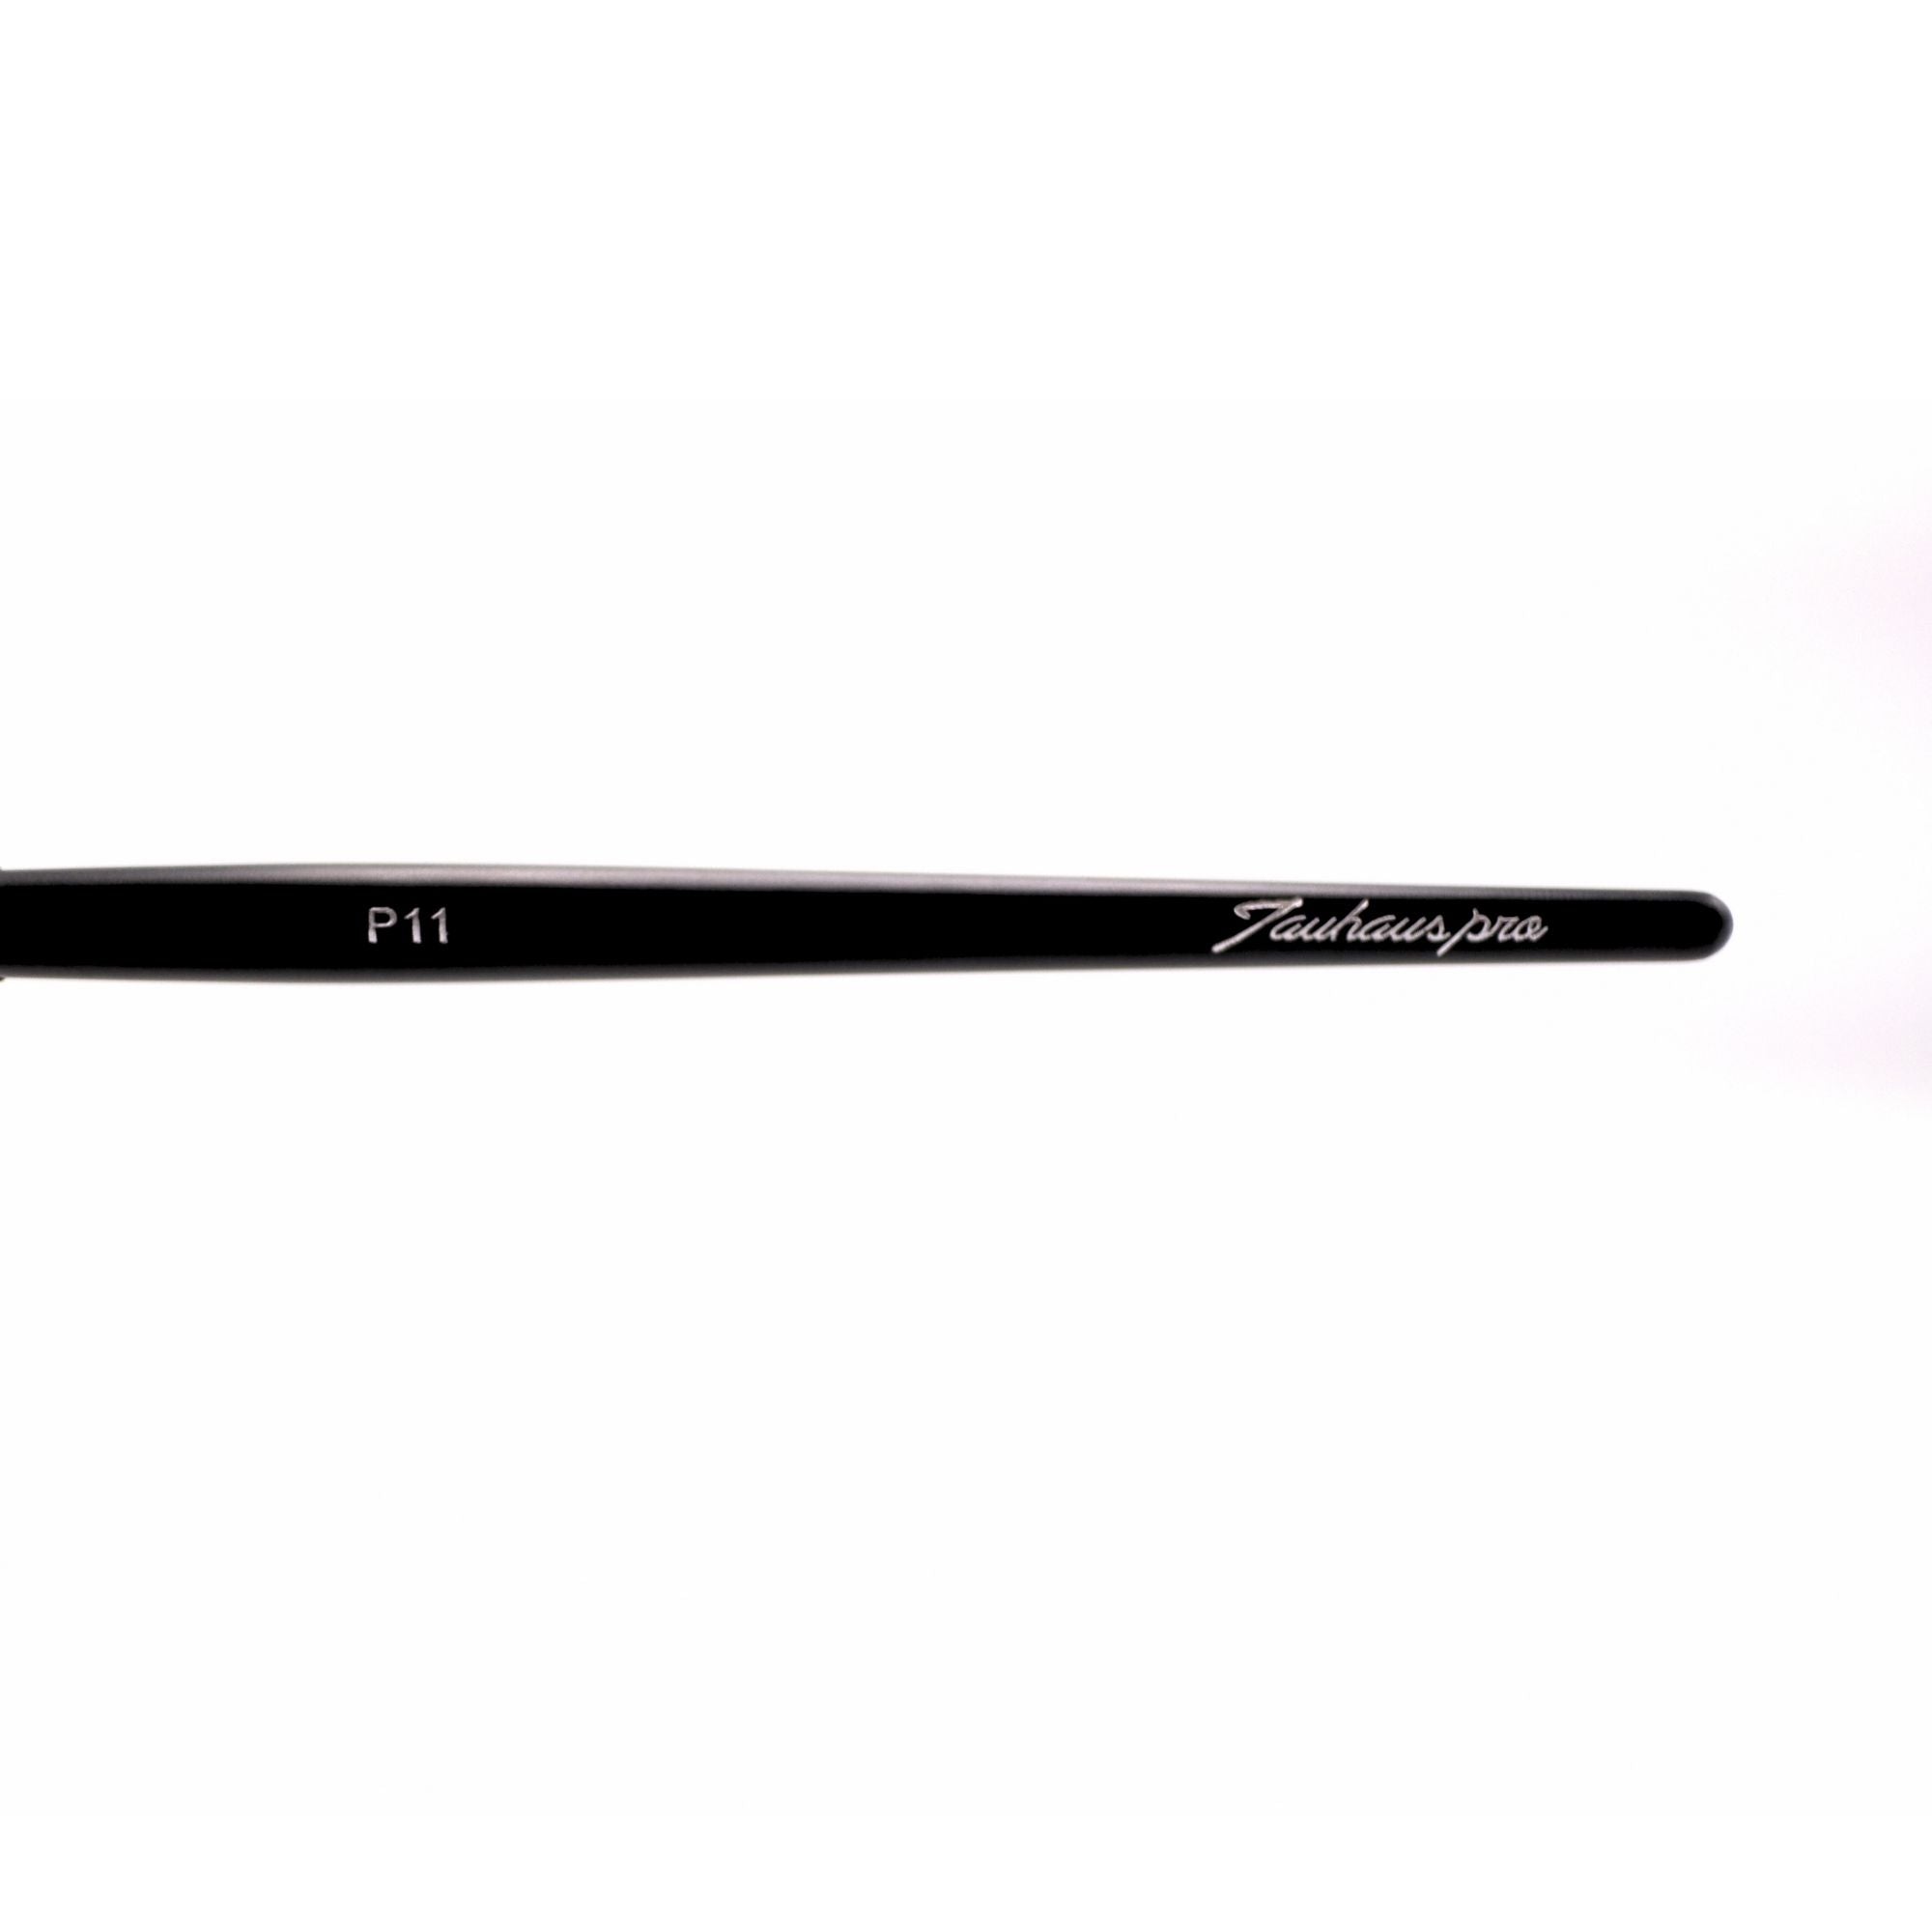 Tauhaus P-11 Eyebrow Brush, Pro Series - Fude Beauty, Japanese Makeup Brushes